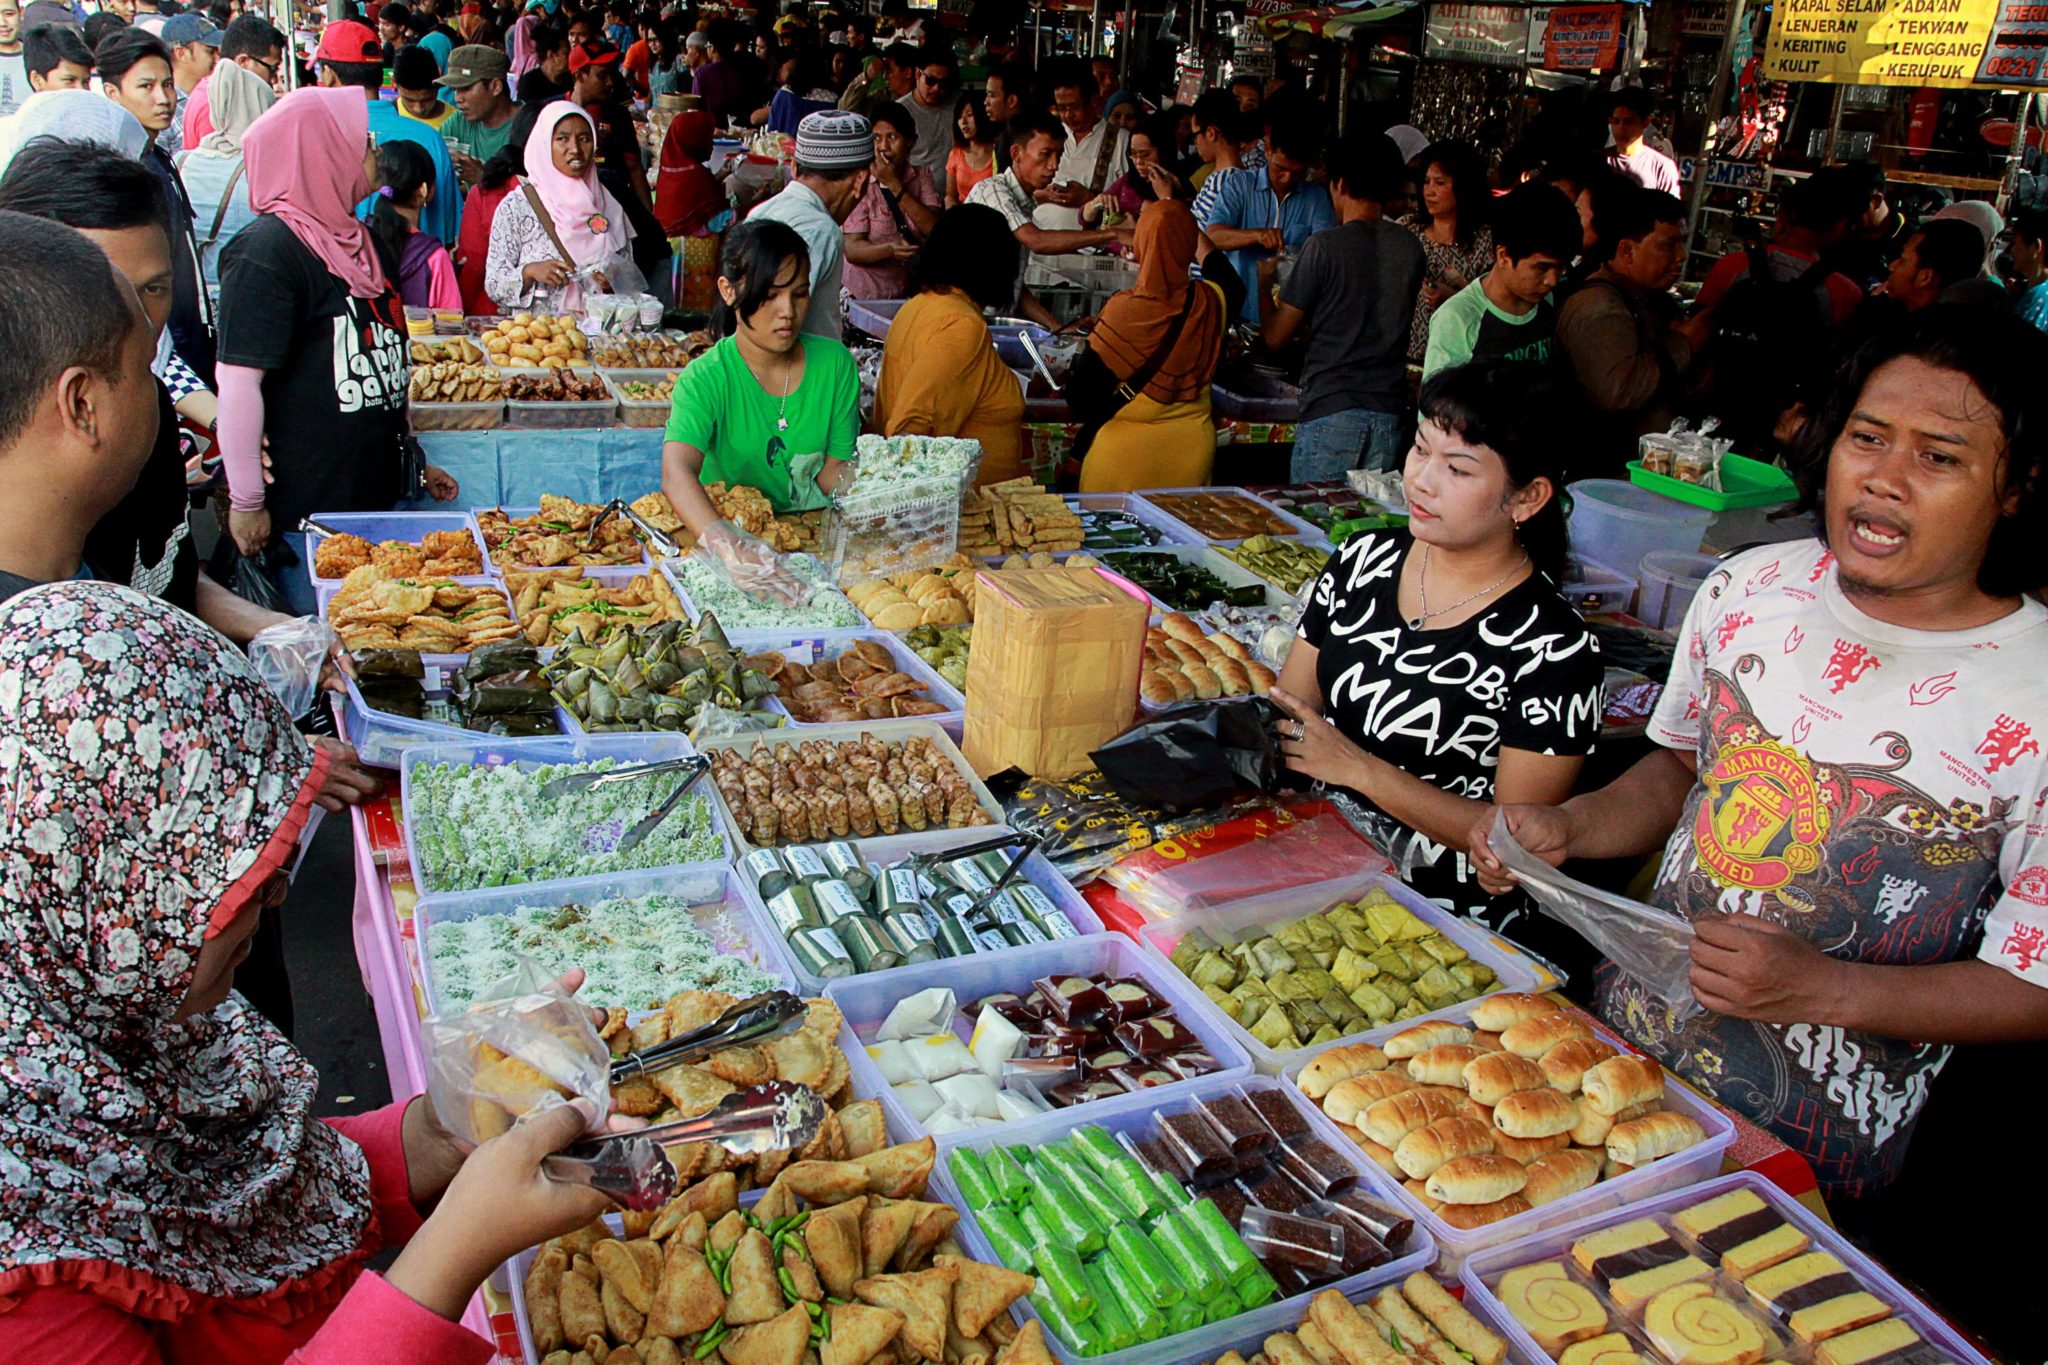 17 Tempat Ngabuburit Di Jakarta Yang Asik Buat Nunggu Bedug